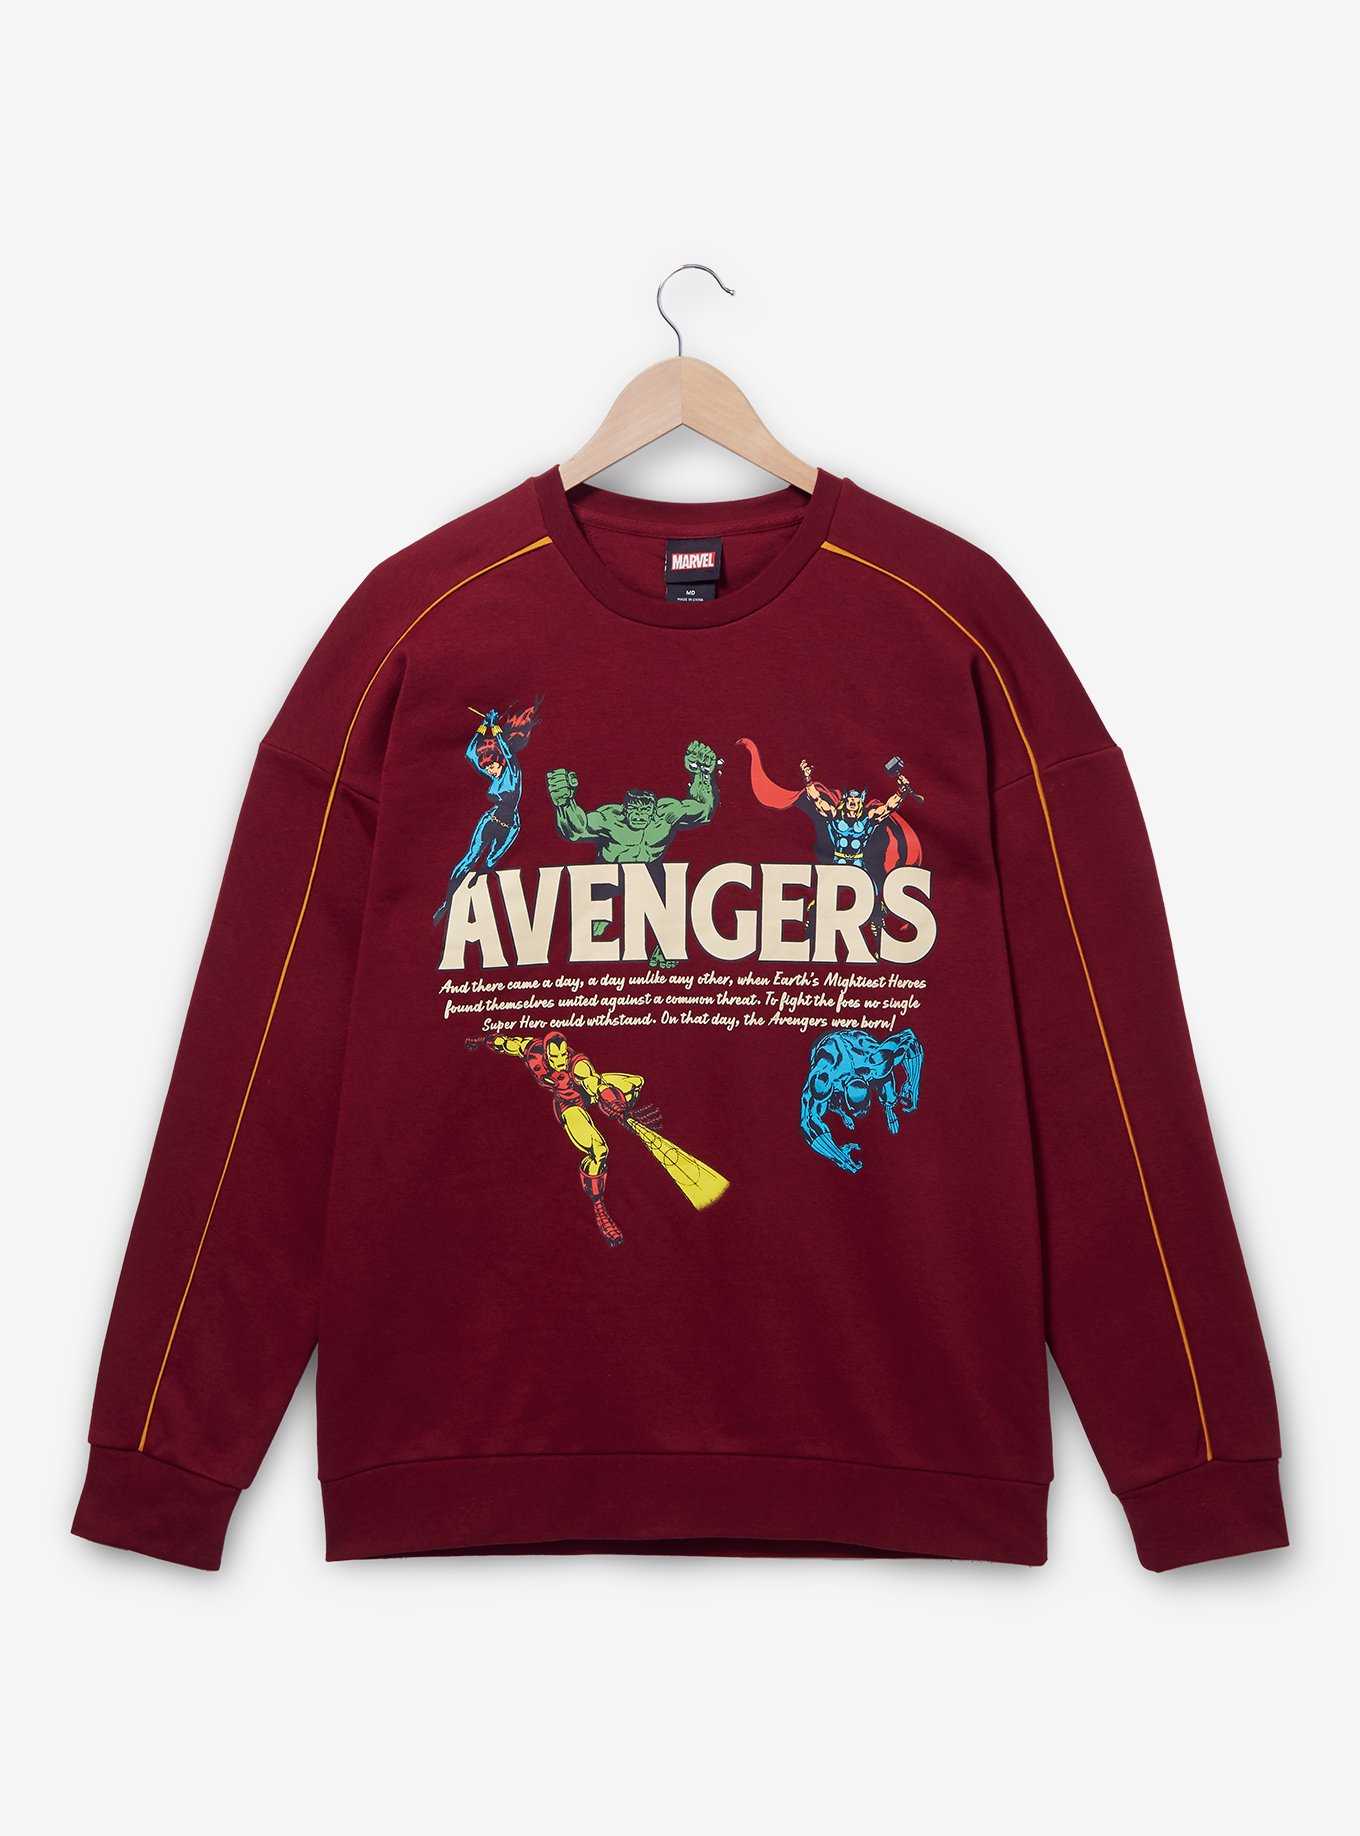 Avengers OFFICIAL Merchandise & Universe Shirts Her |